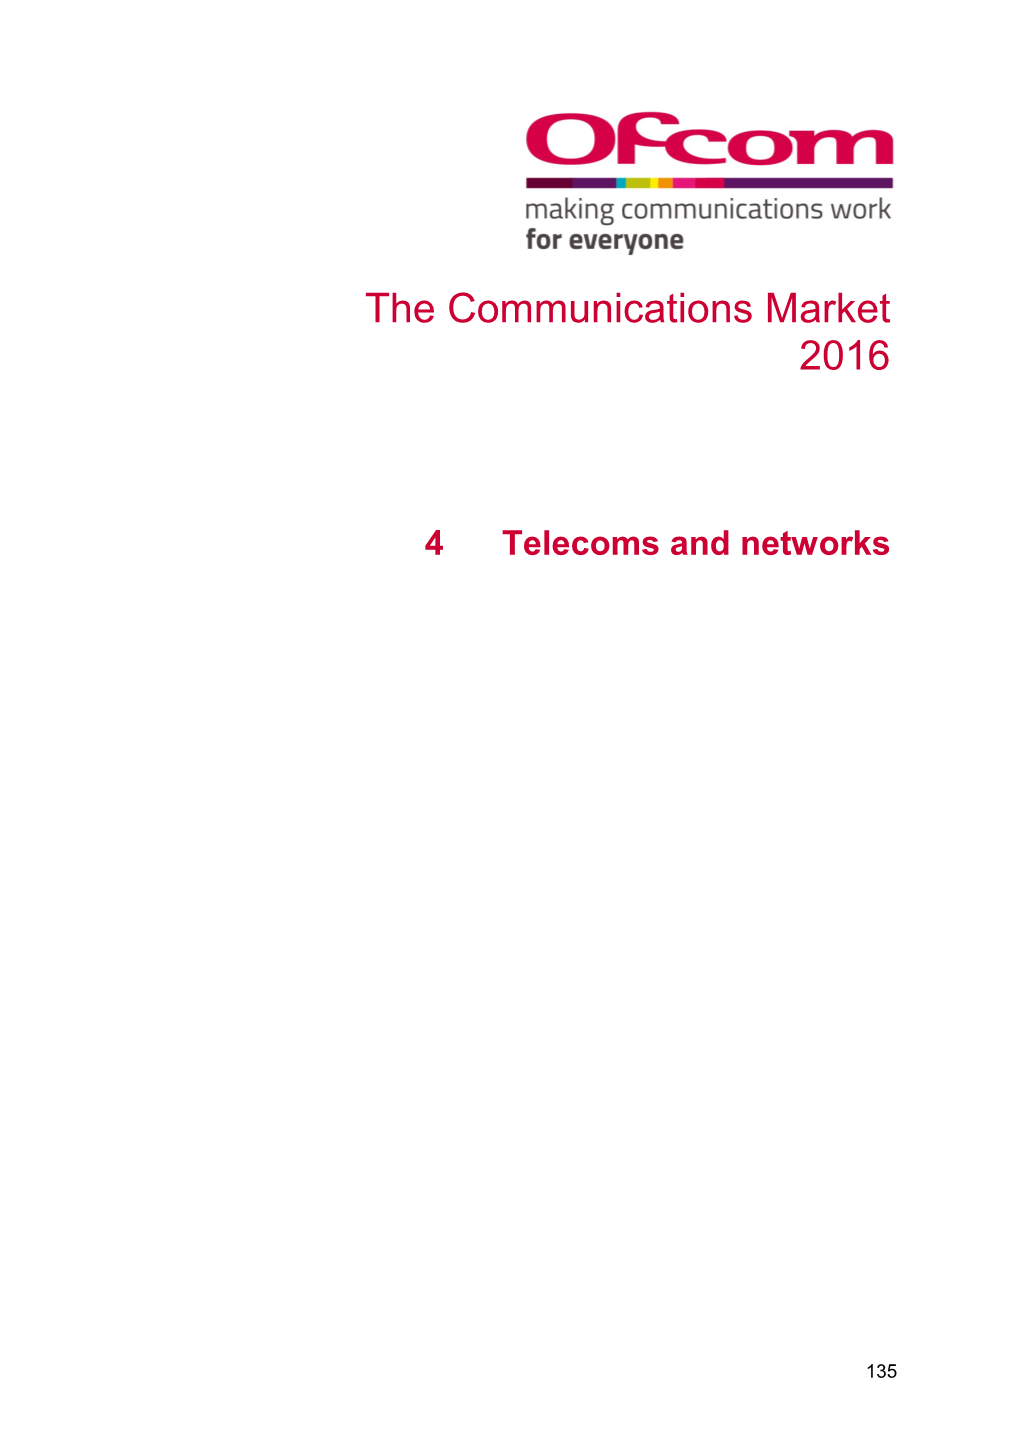 The Communications Market 2016